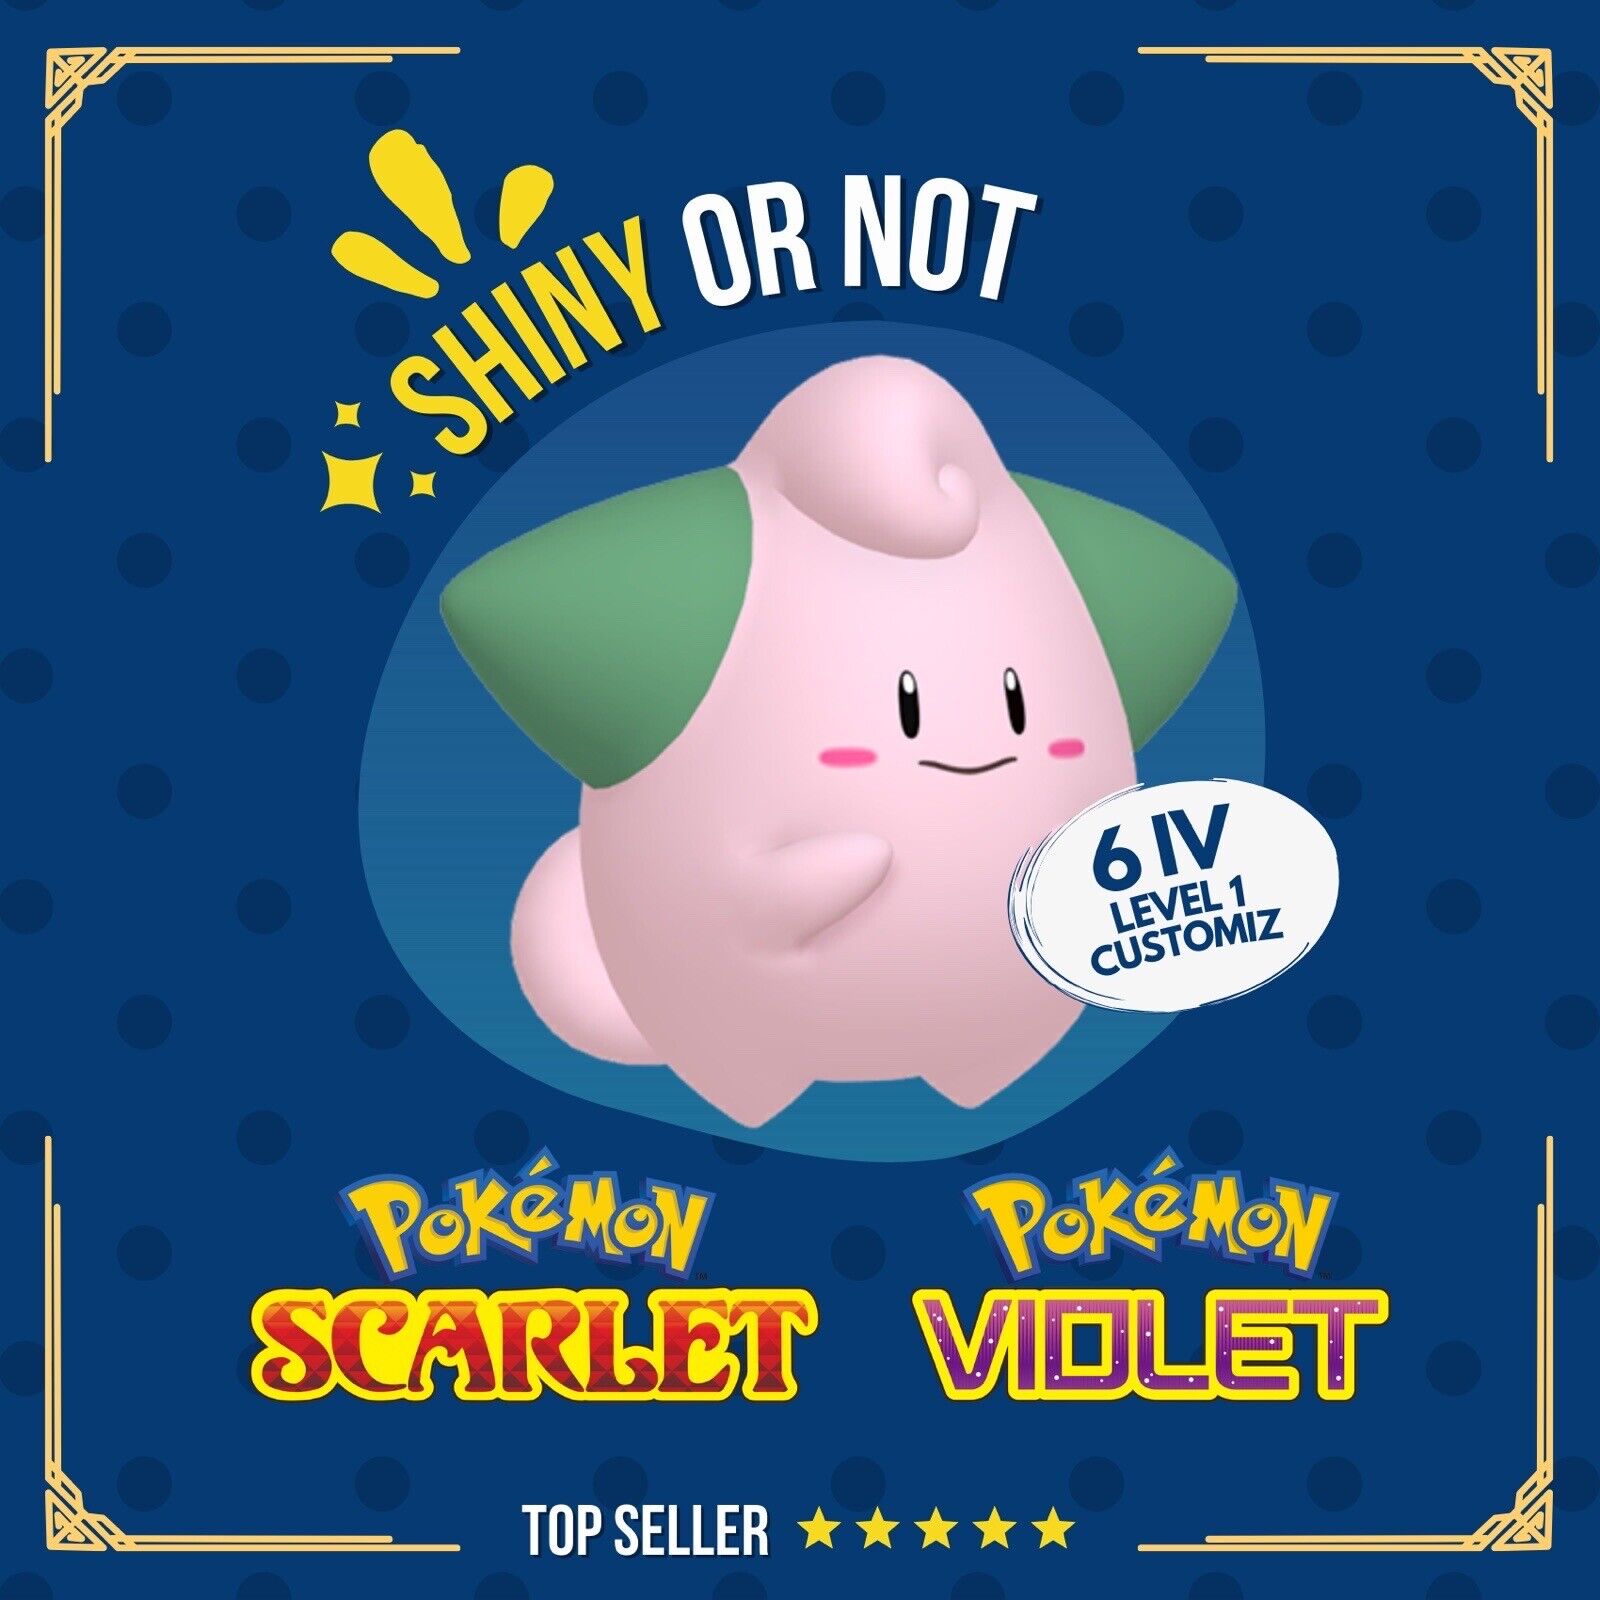 Cleffa Shiny or Non ✨ 6 IV Customizable Nature Level OT Pokémon Scarlet Violet by Shiny Living Dex | Shiny Living Dex